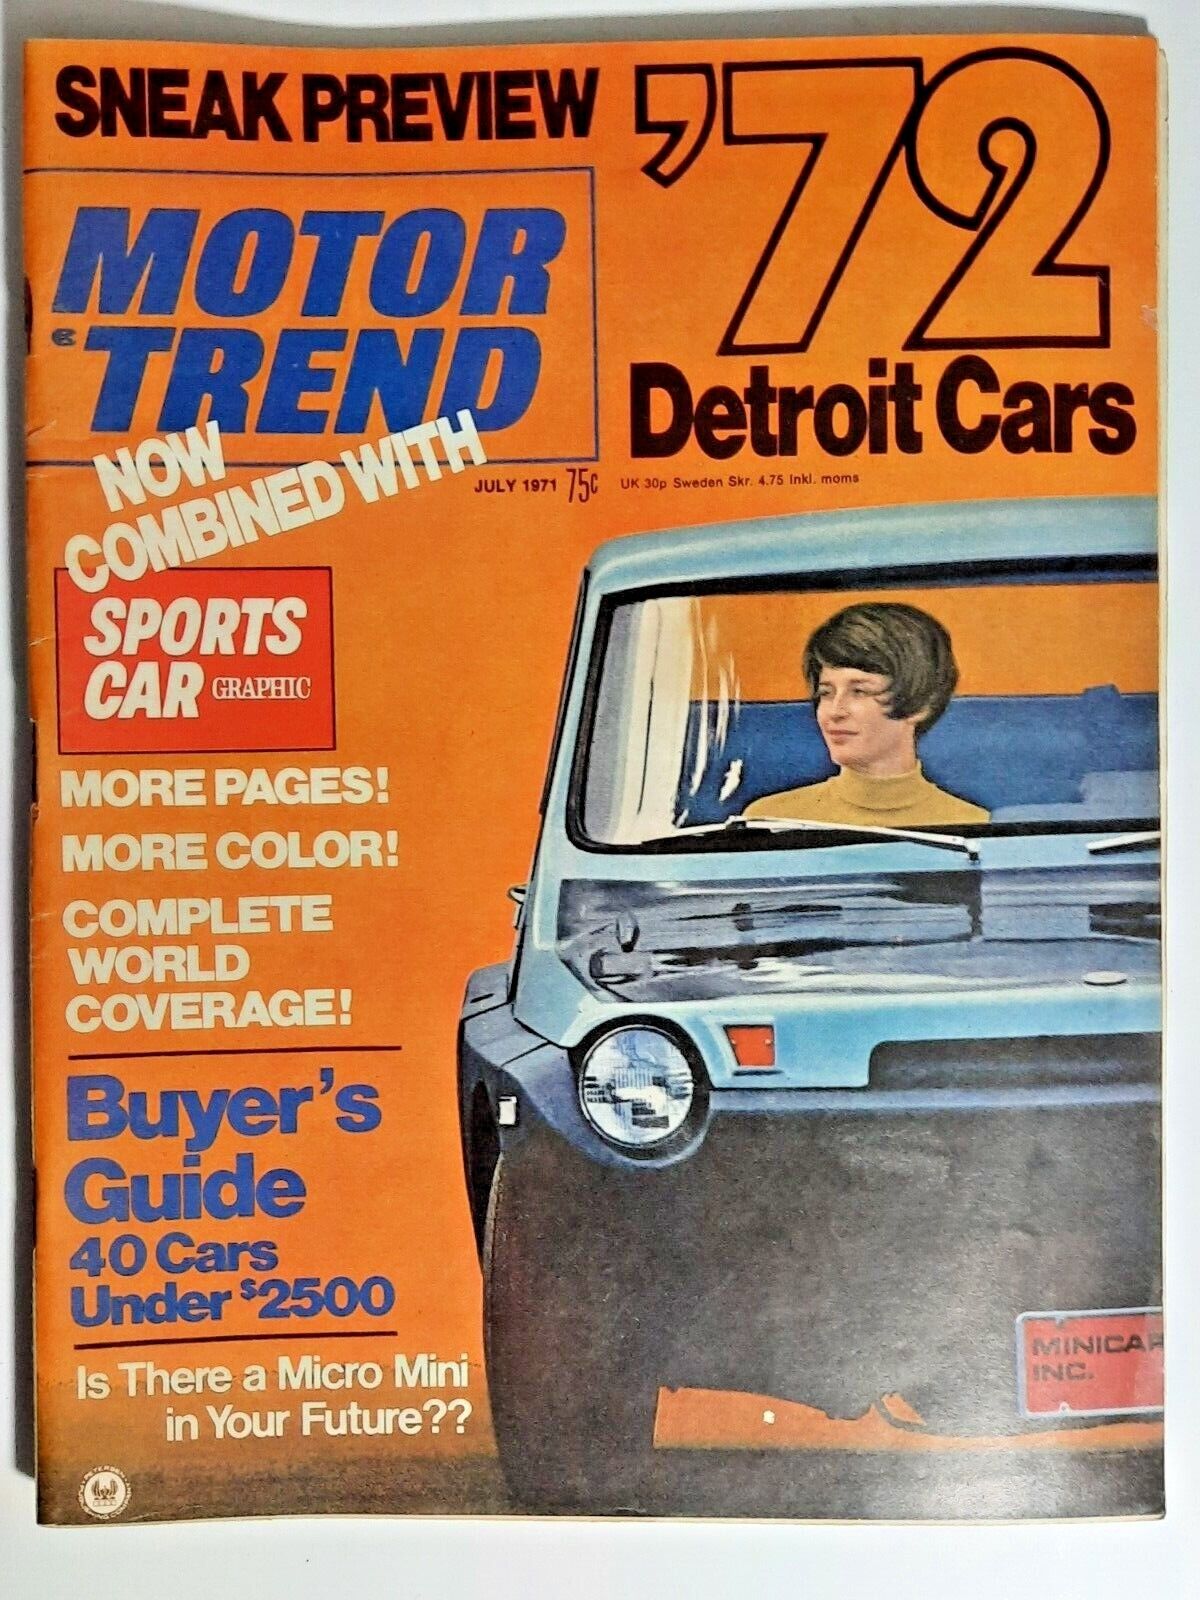 Vintage July 1971 MOTOR TREND magazine 1972 Sneak Preview Detroit Cars